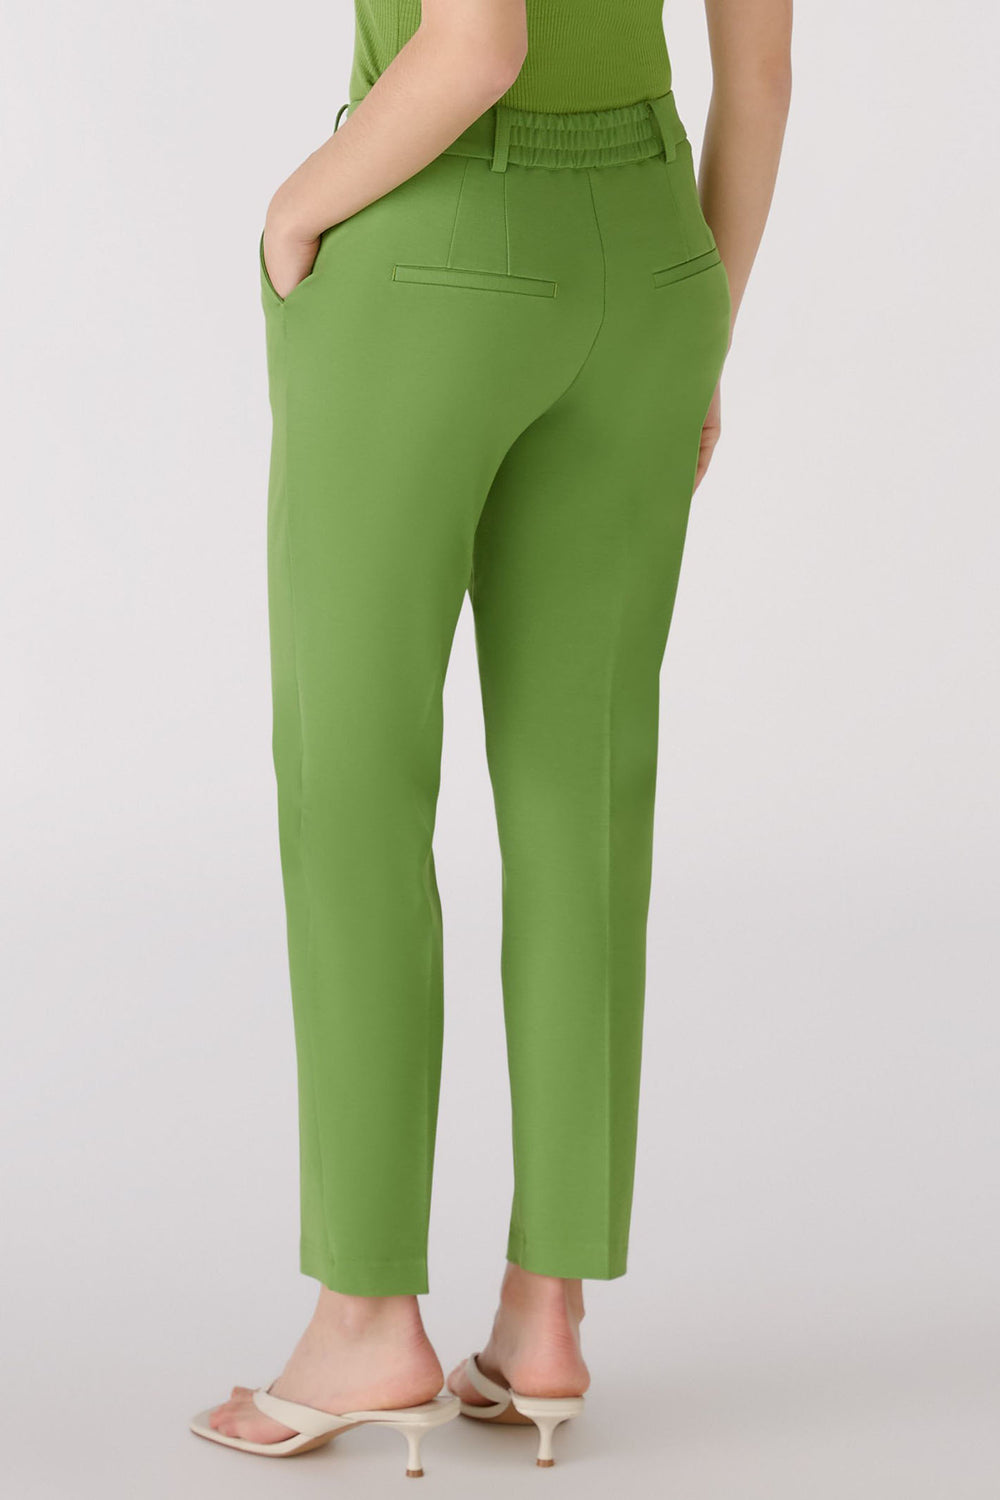 Oui 88390 Green Feylia Jersey Trousers - Olivia Grace Fashion